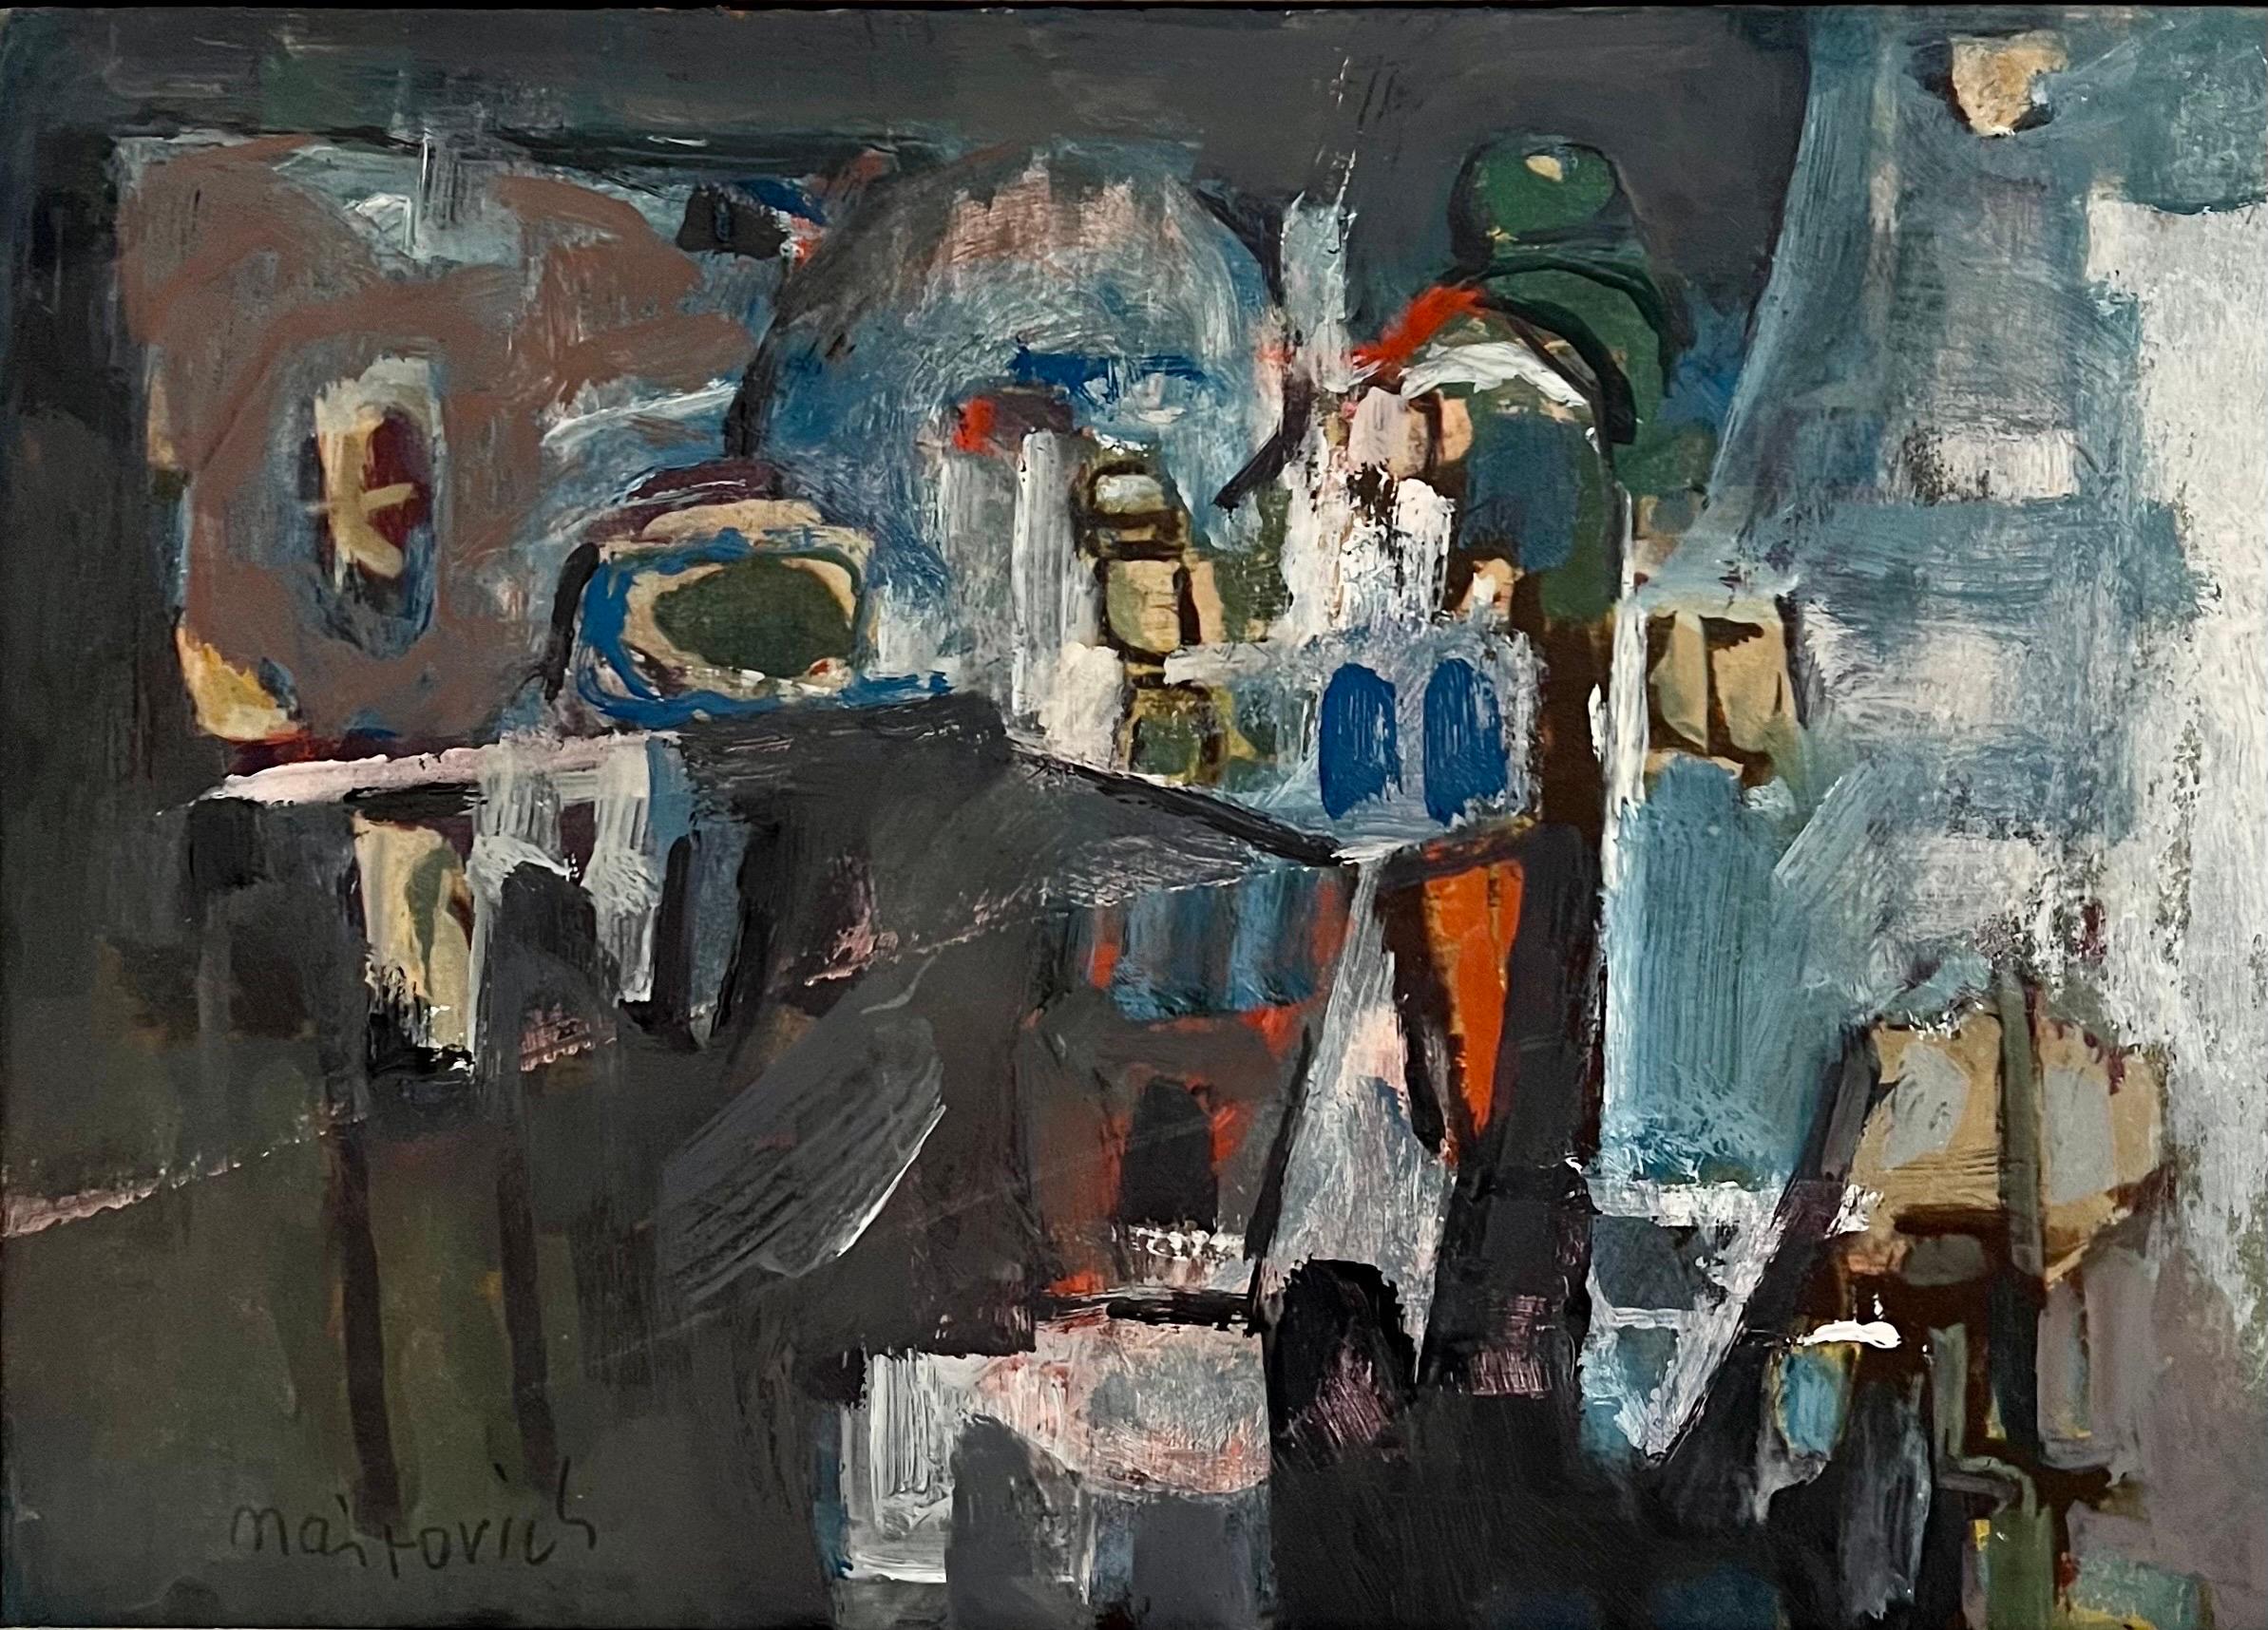 Mairovich, peinture moderniste israélienne de Tel Aviv, paysage urbain abstrait et vibrant - Painting de Zvi Mairovich